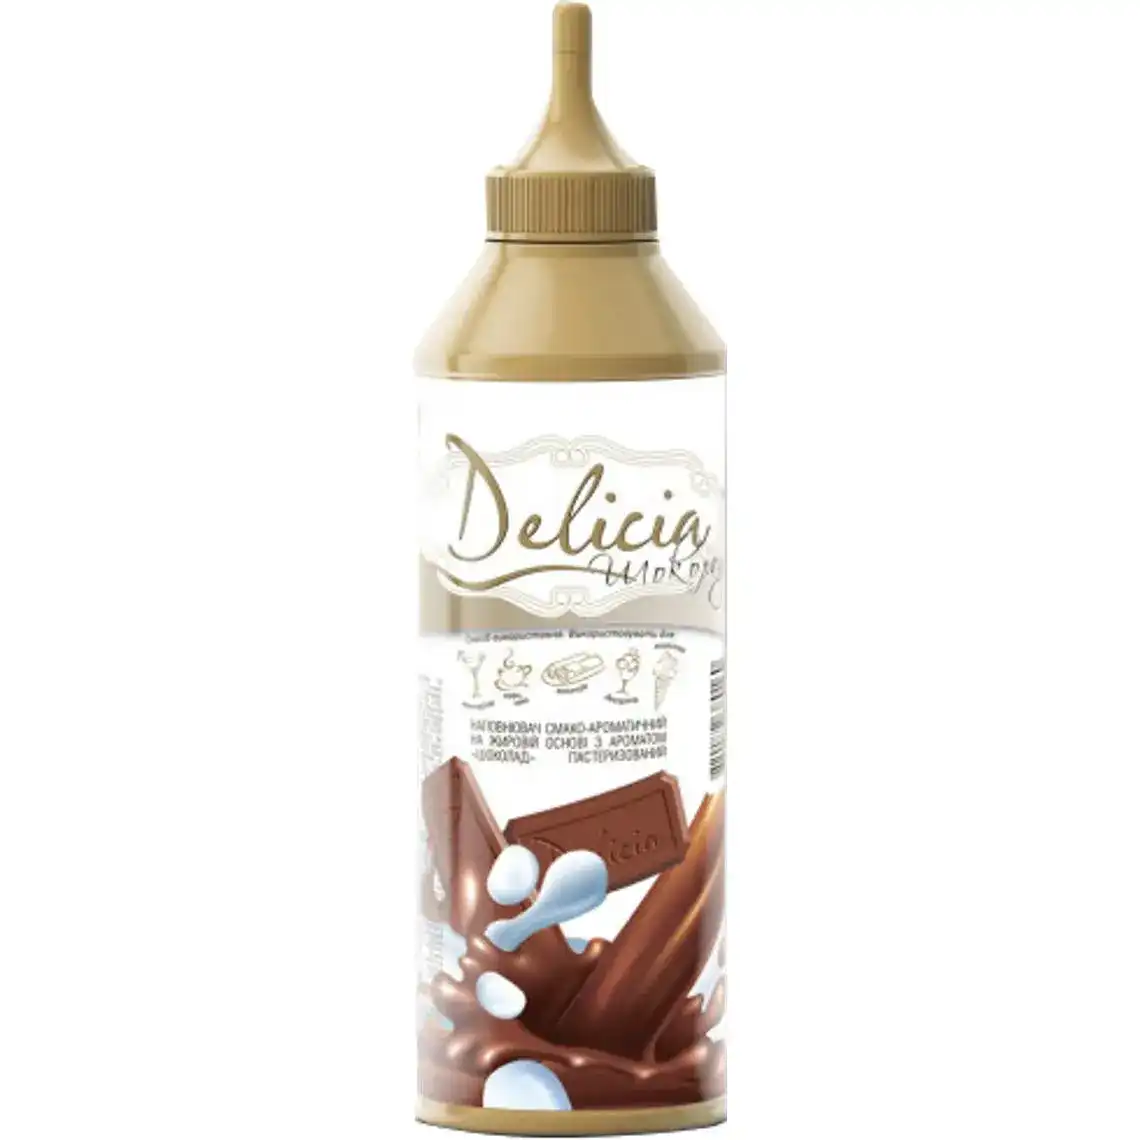 Топінг Delicia шоколад 600 г